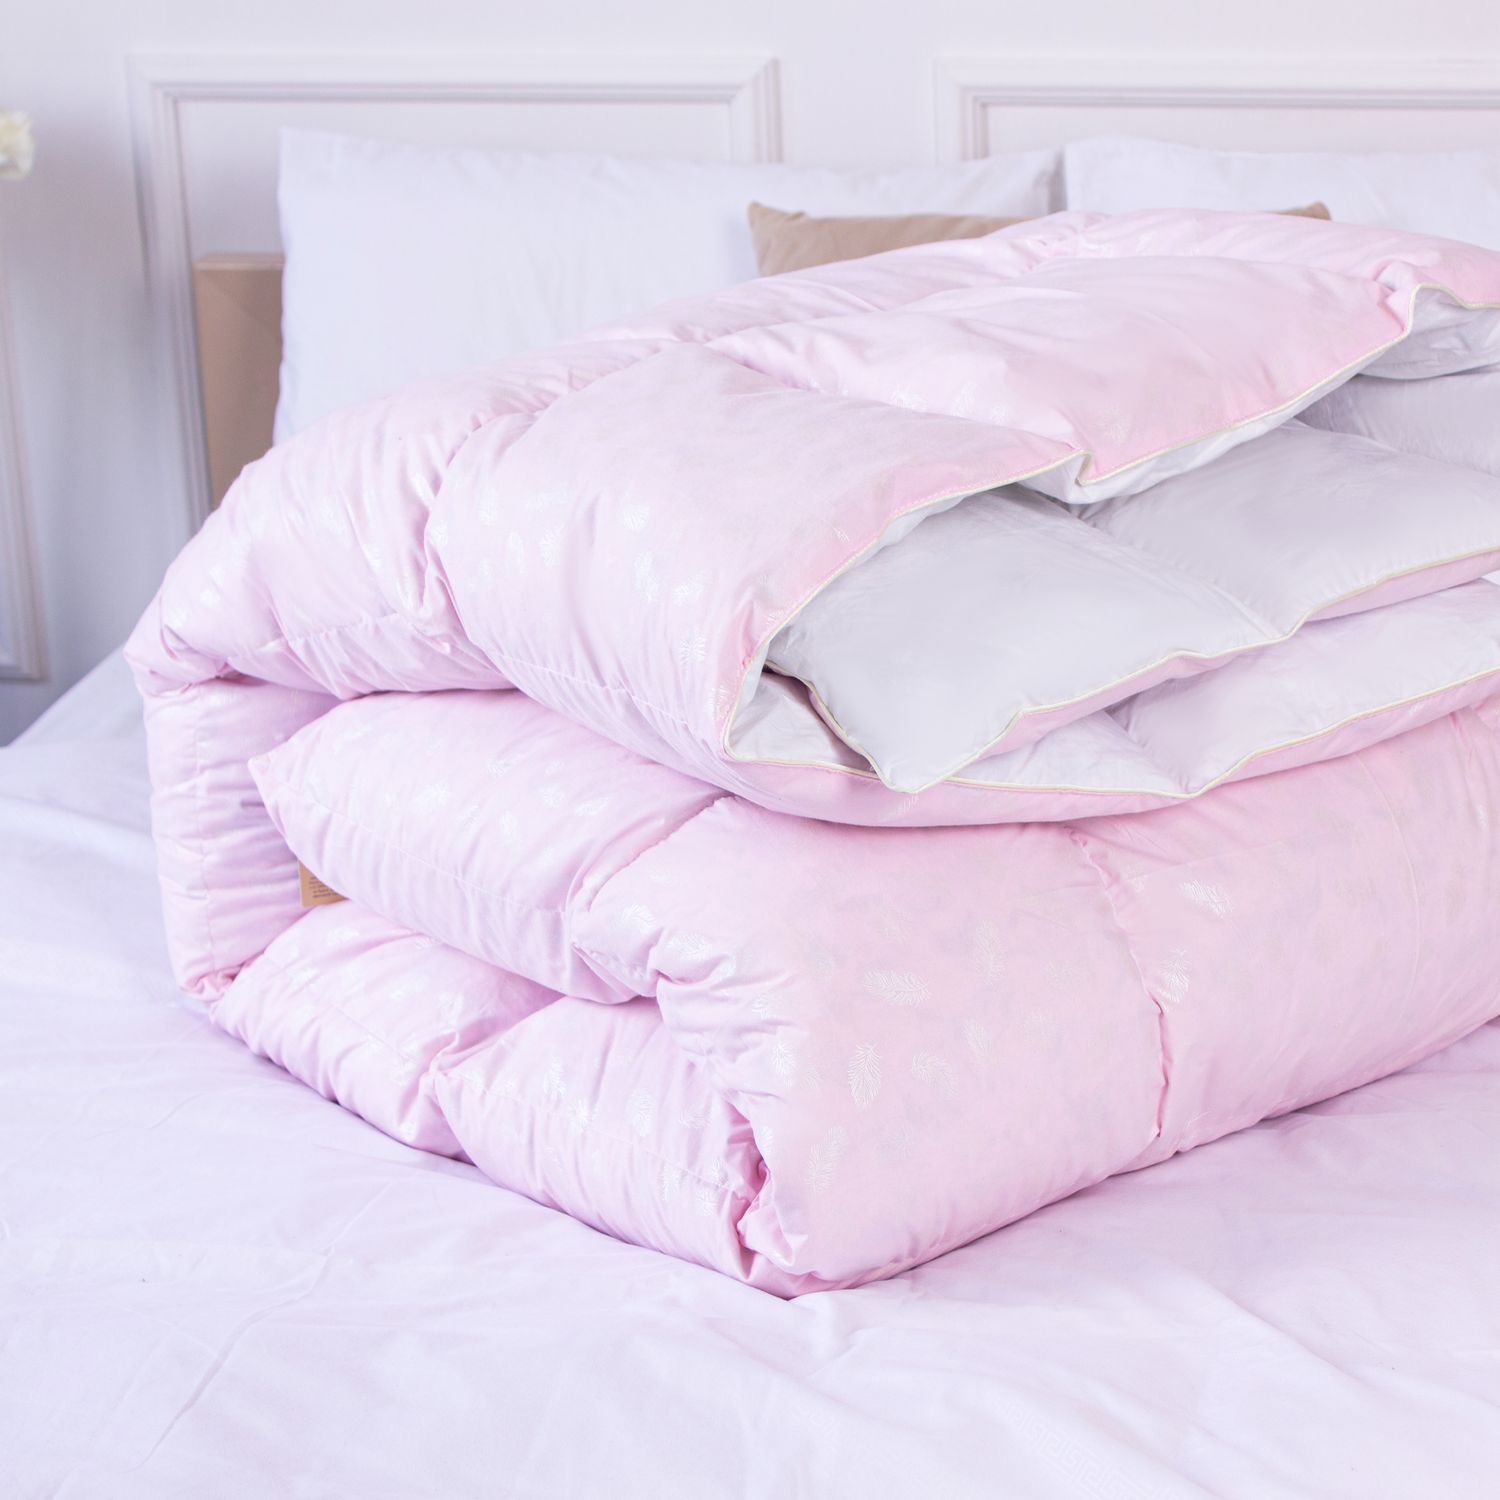 Одеяло пуховое MirSon Karmen №1832 Bio-Pink, 70% пух, евростандарт, 220x200, розовое (2200003013122) - фото 3